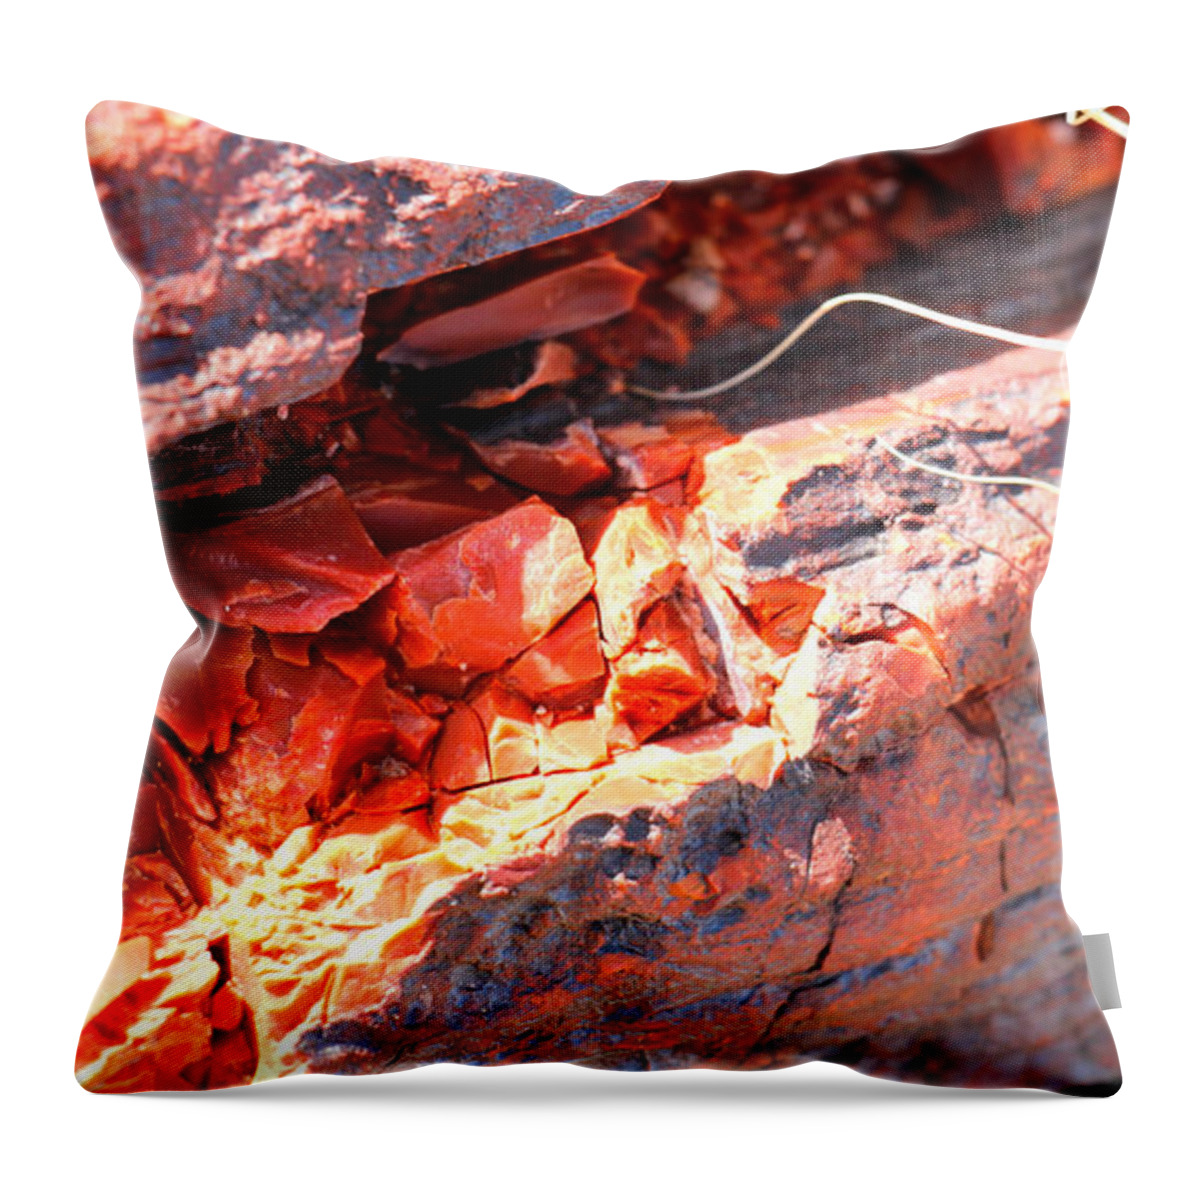 Petrified Throw Pillow featuring the photograph Wood Chips by Shawn MacMeekin